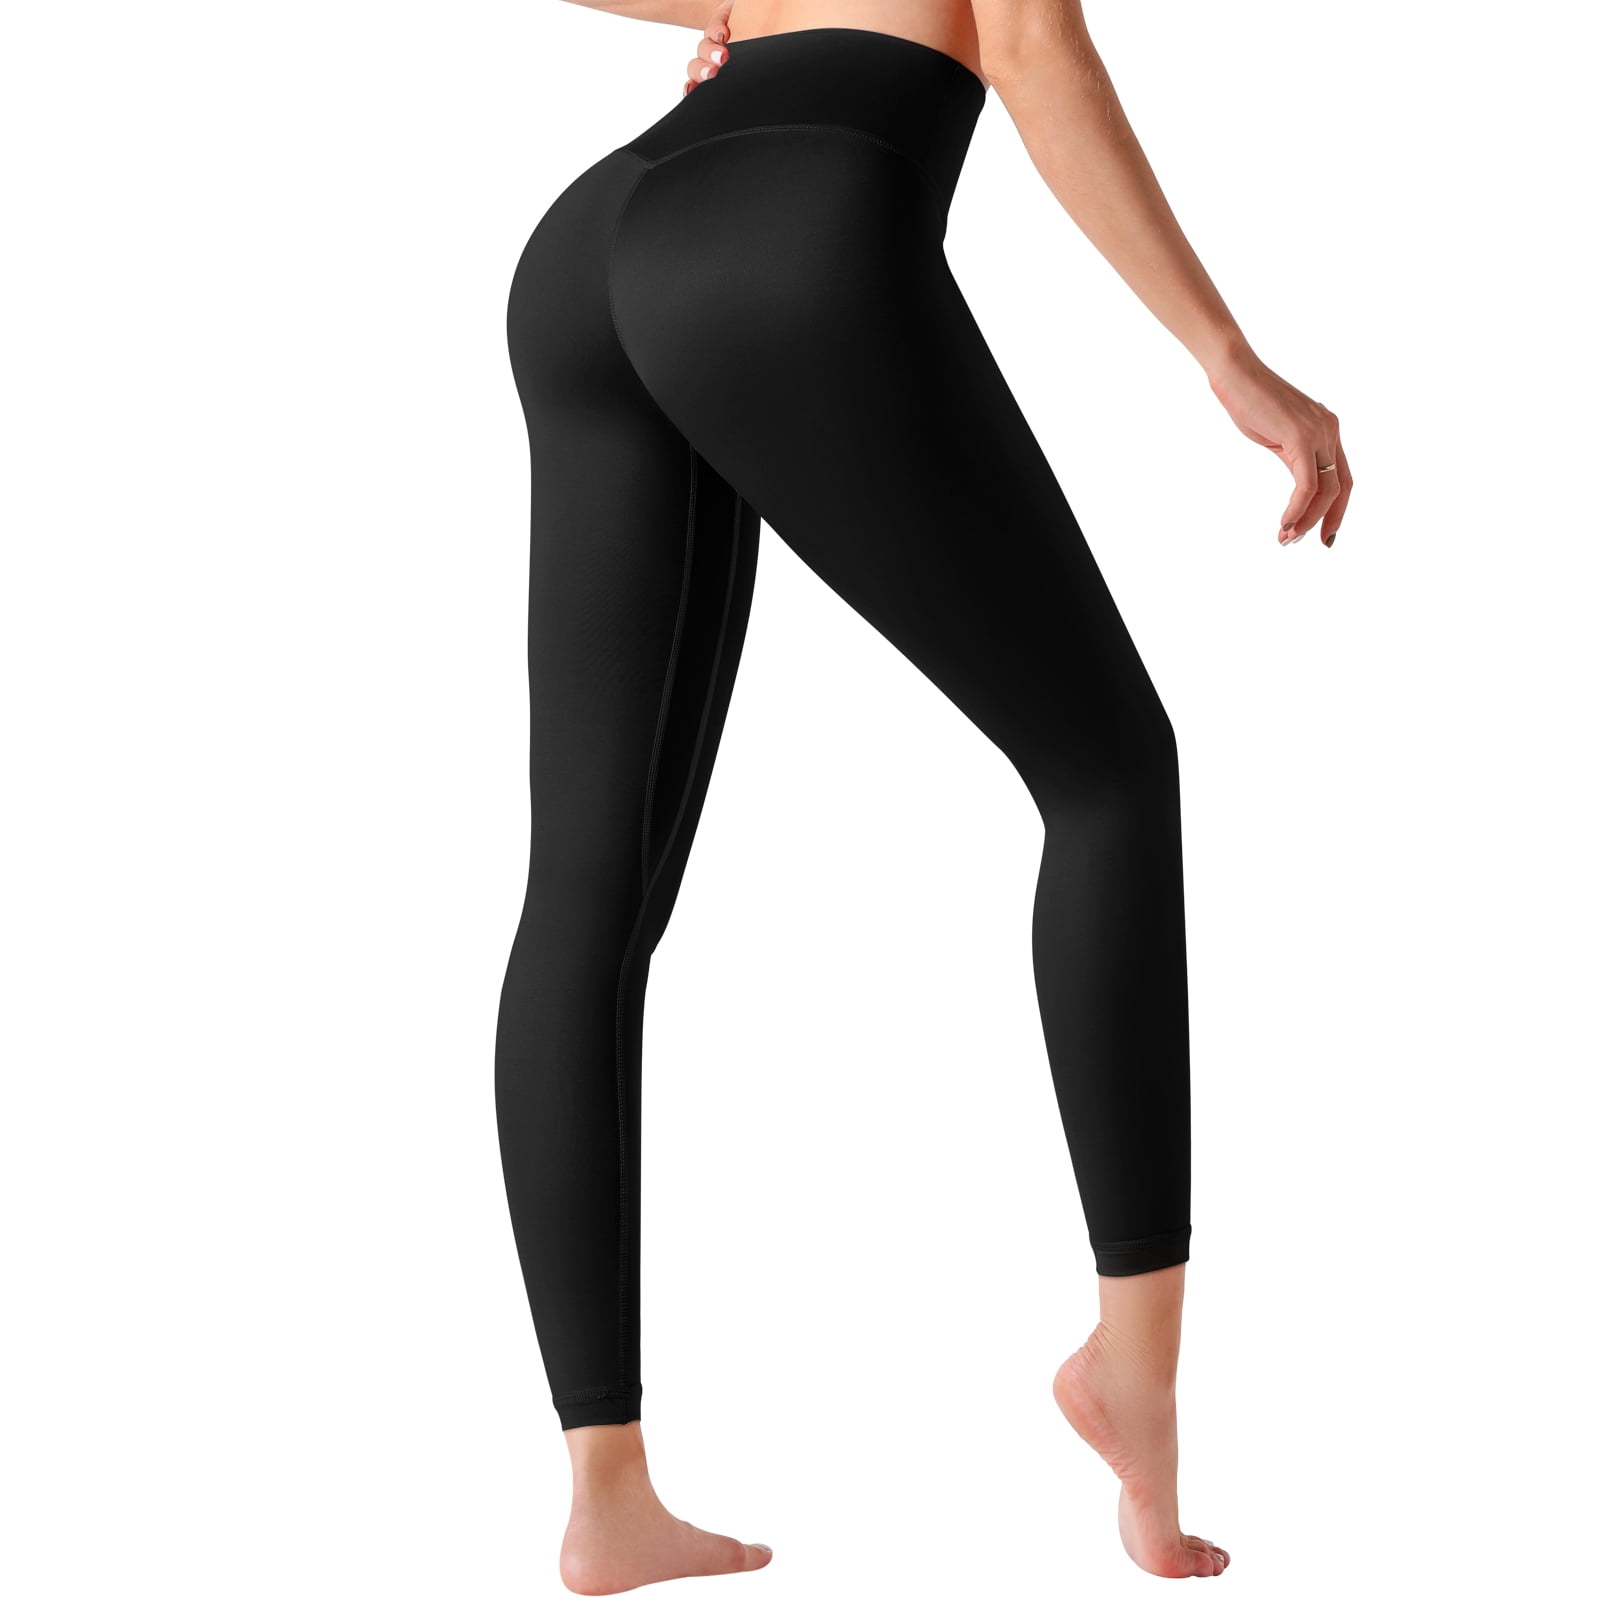 Funbiz Black Leggings for Womens Girls Yoga Pants High Waisted Gym ...